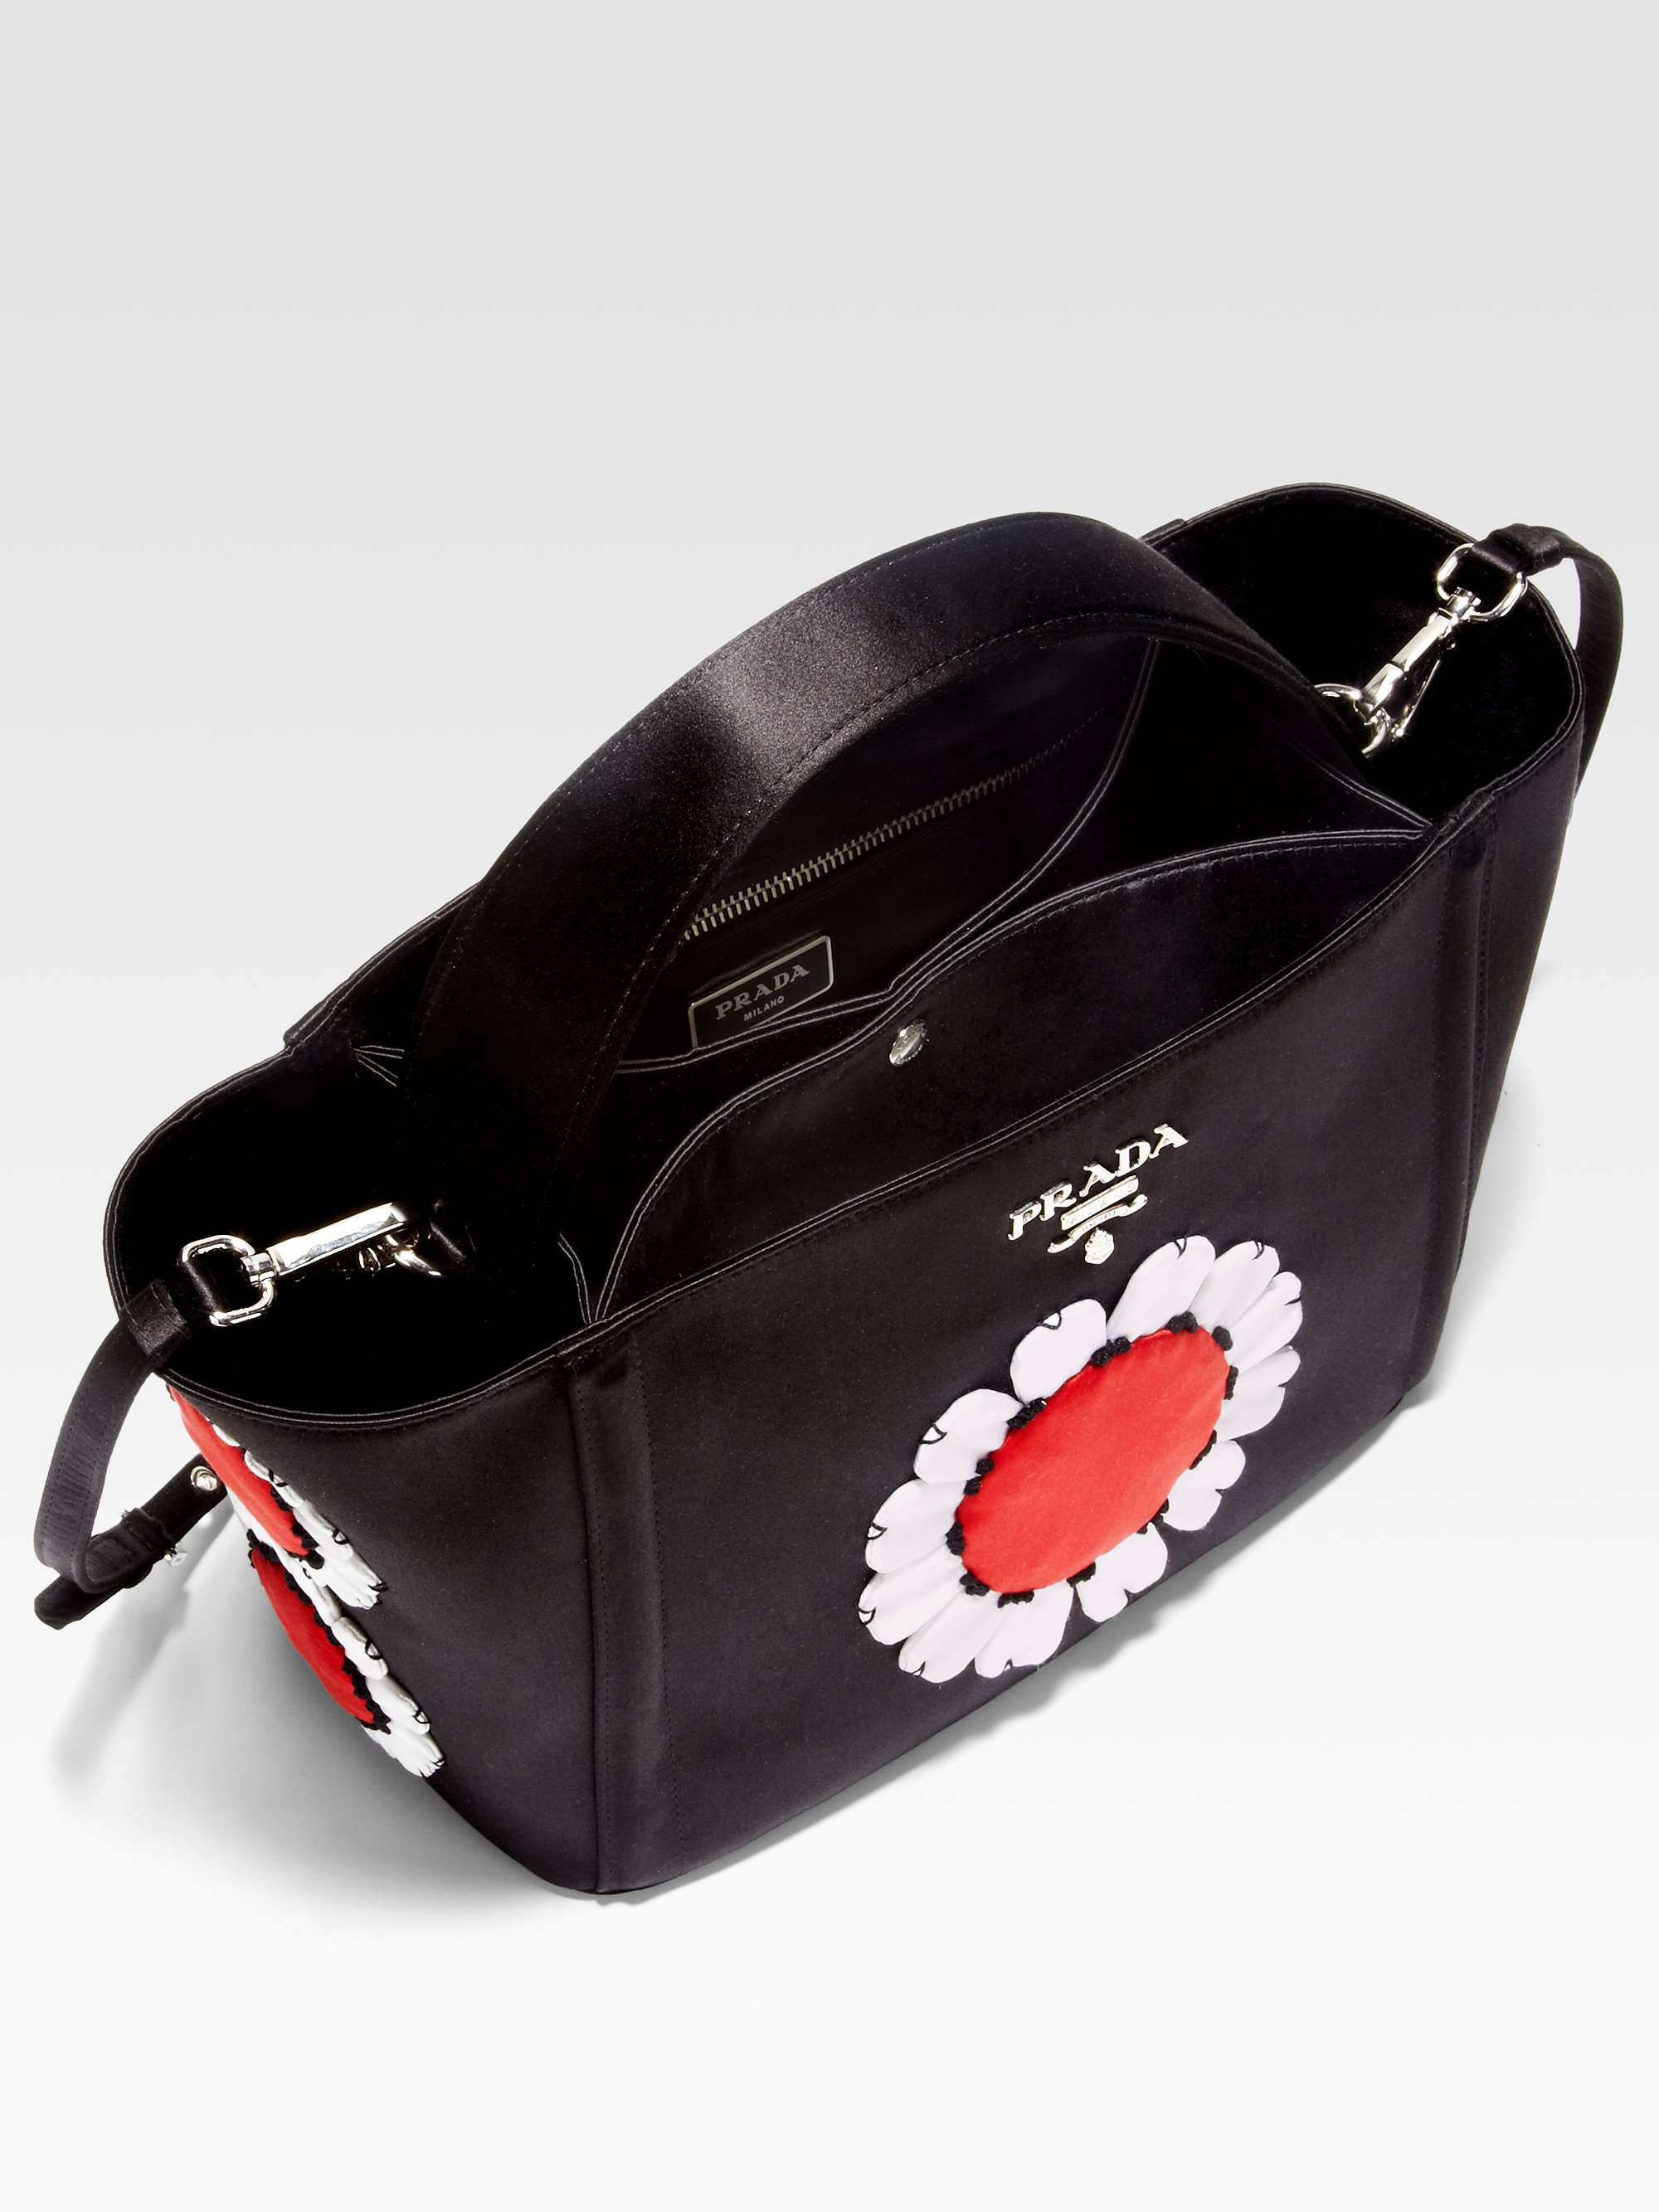 brown leather prada handbag - Prada Raso Flower Satin Basket Bag in Black (black pink) | Lyst